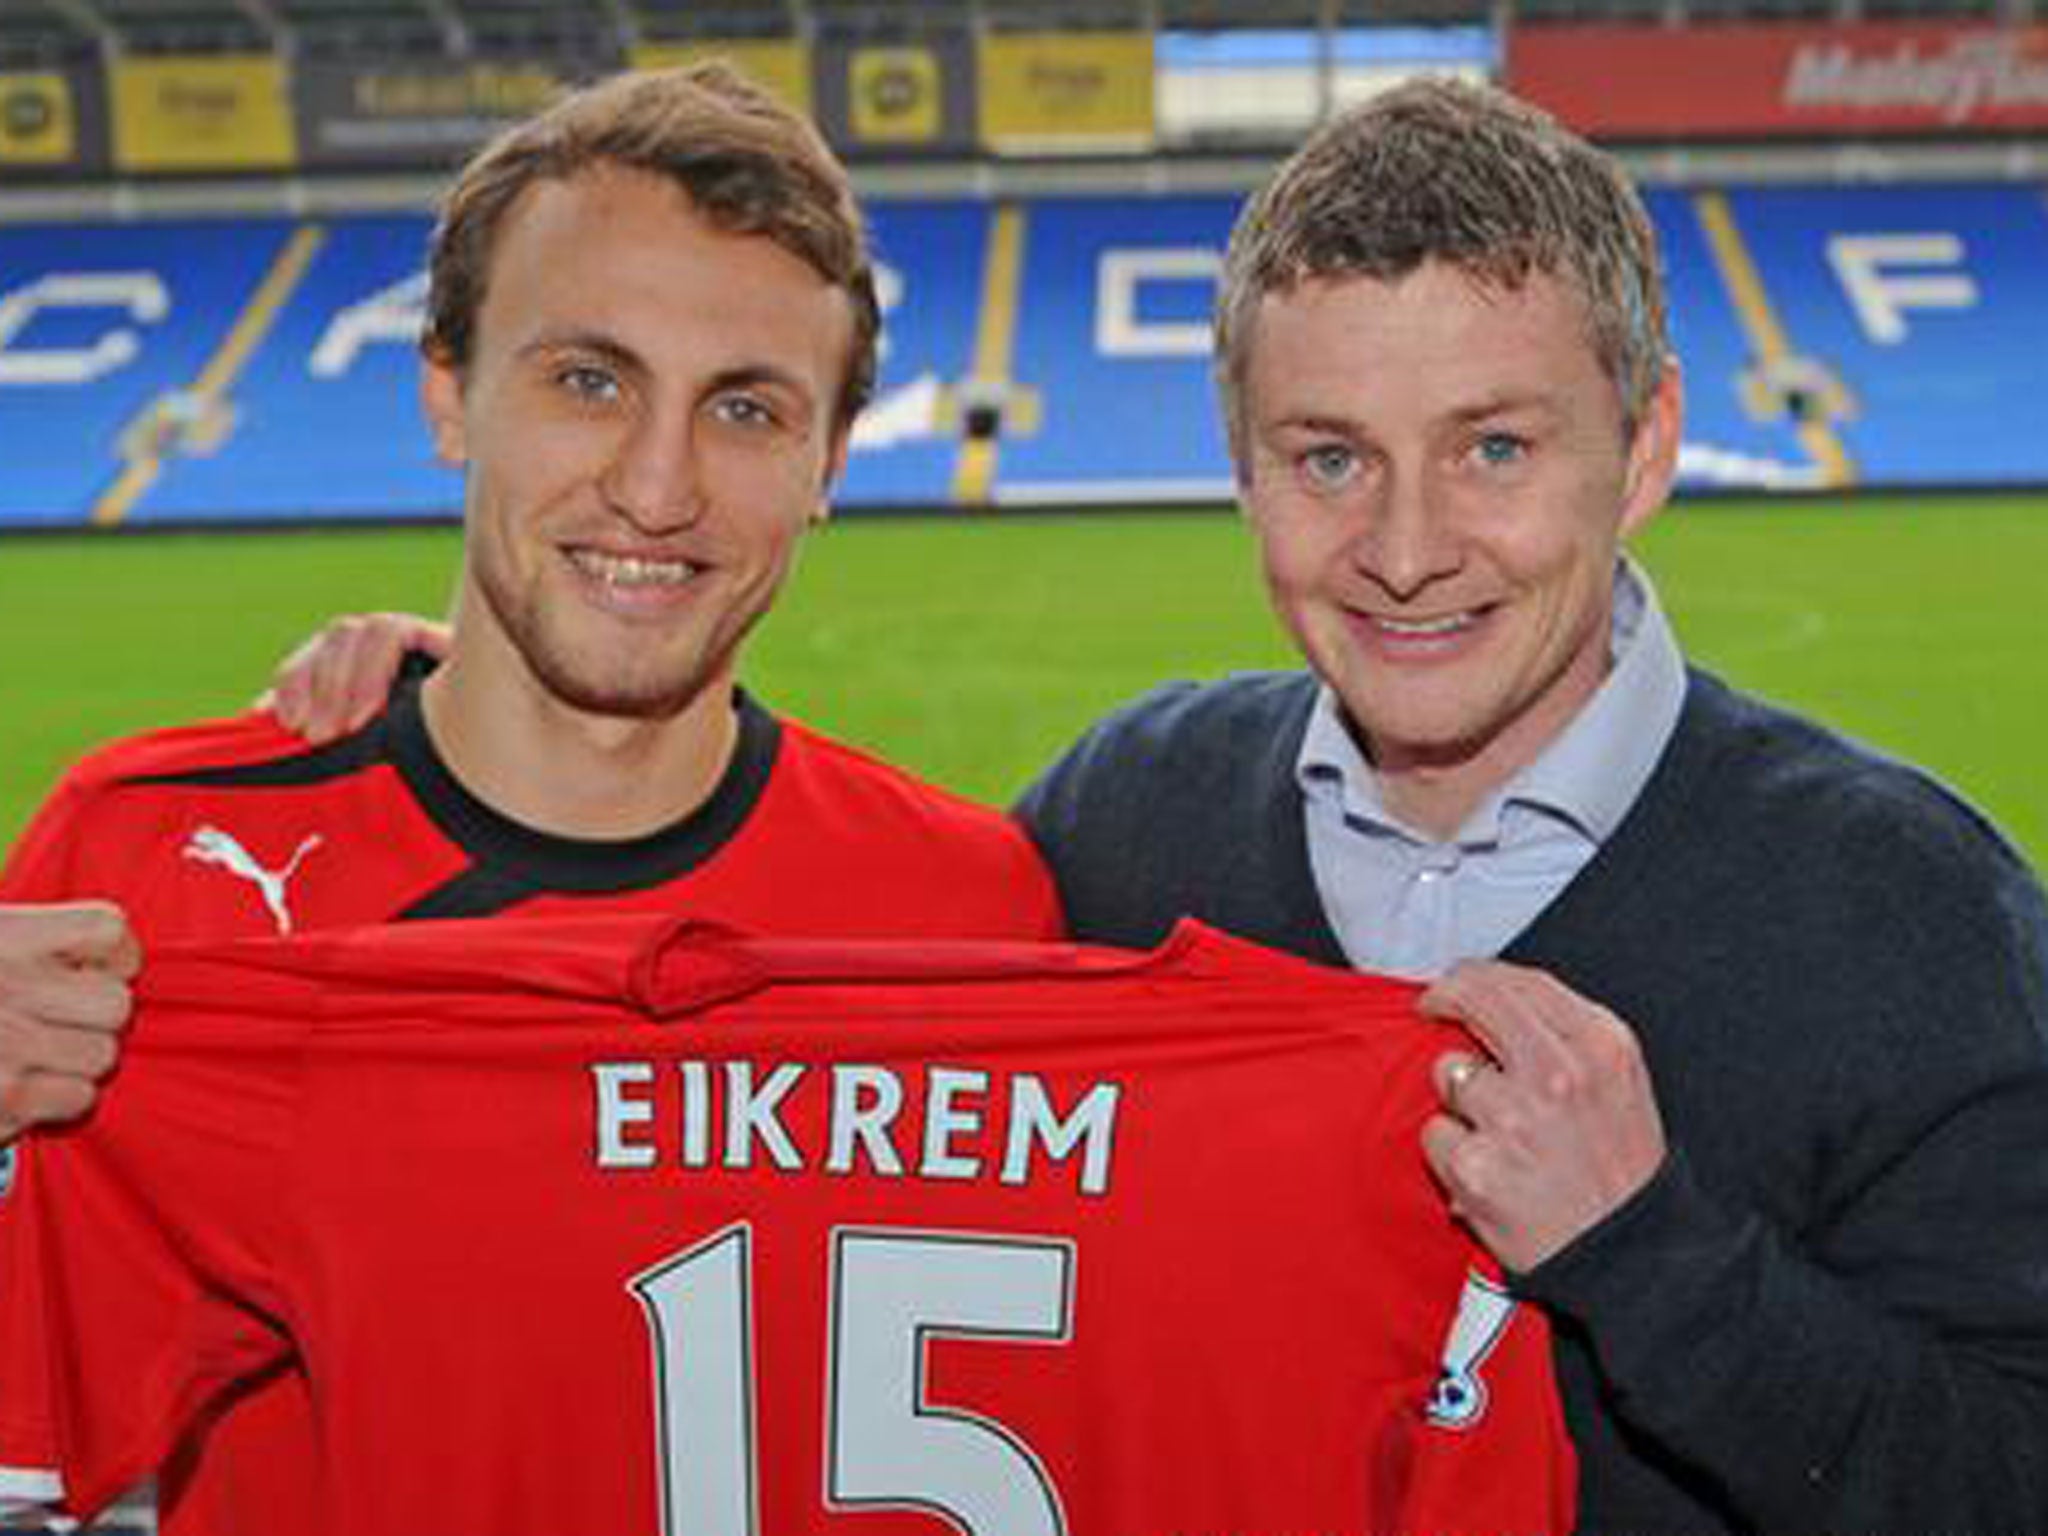 New Cardiff City signing Magnus Wolff Eikrem